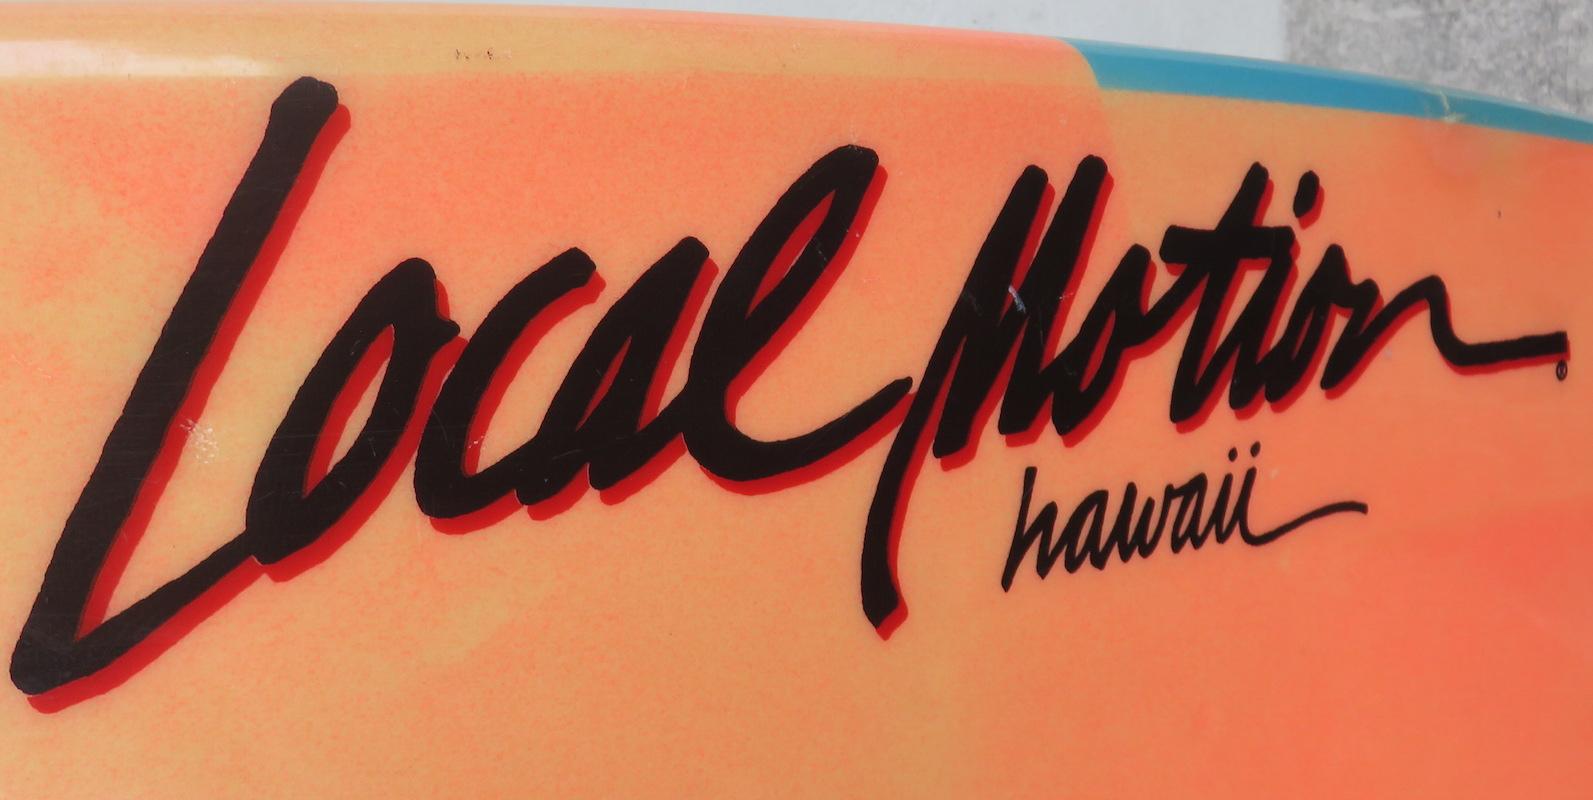 Fiberglass 1980s Vintage Local Motion Surfboard by Robin Prodanovich